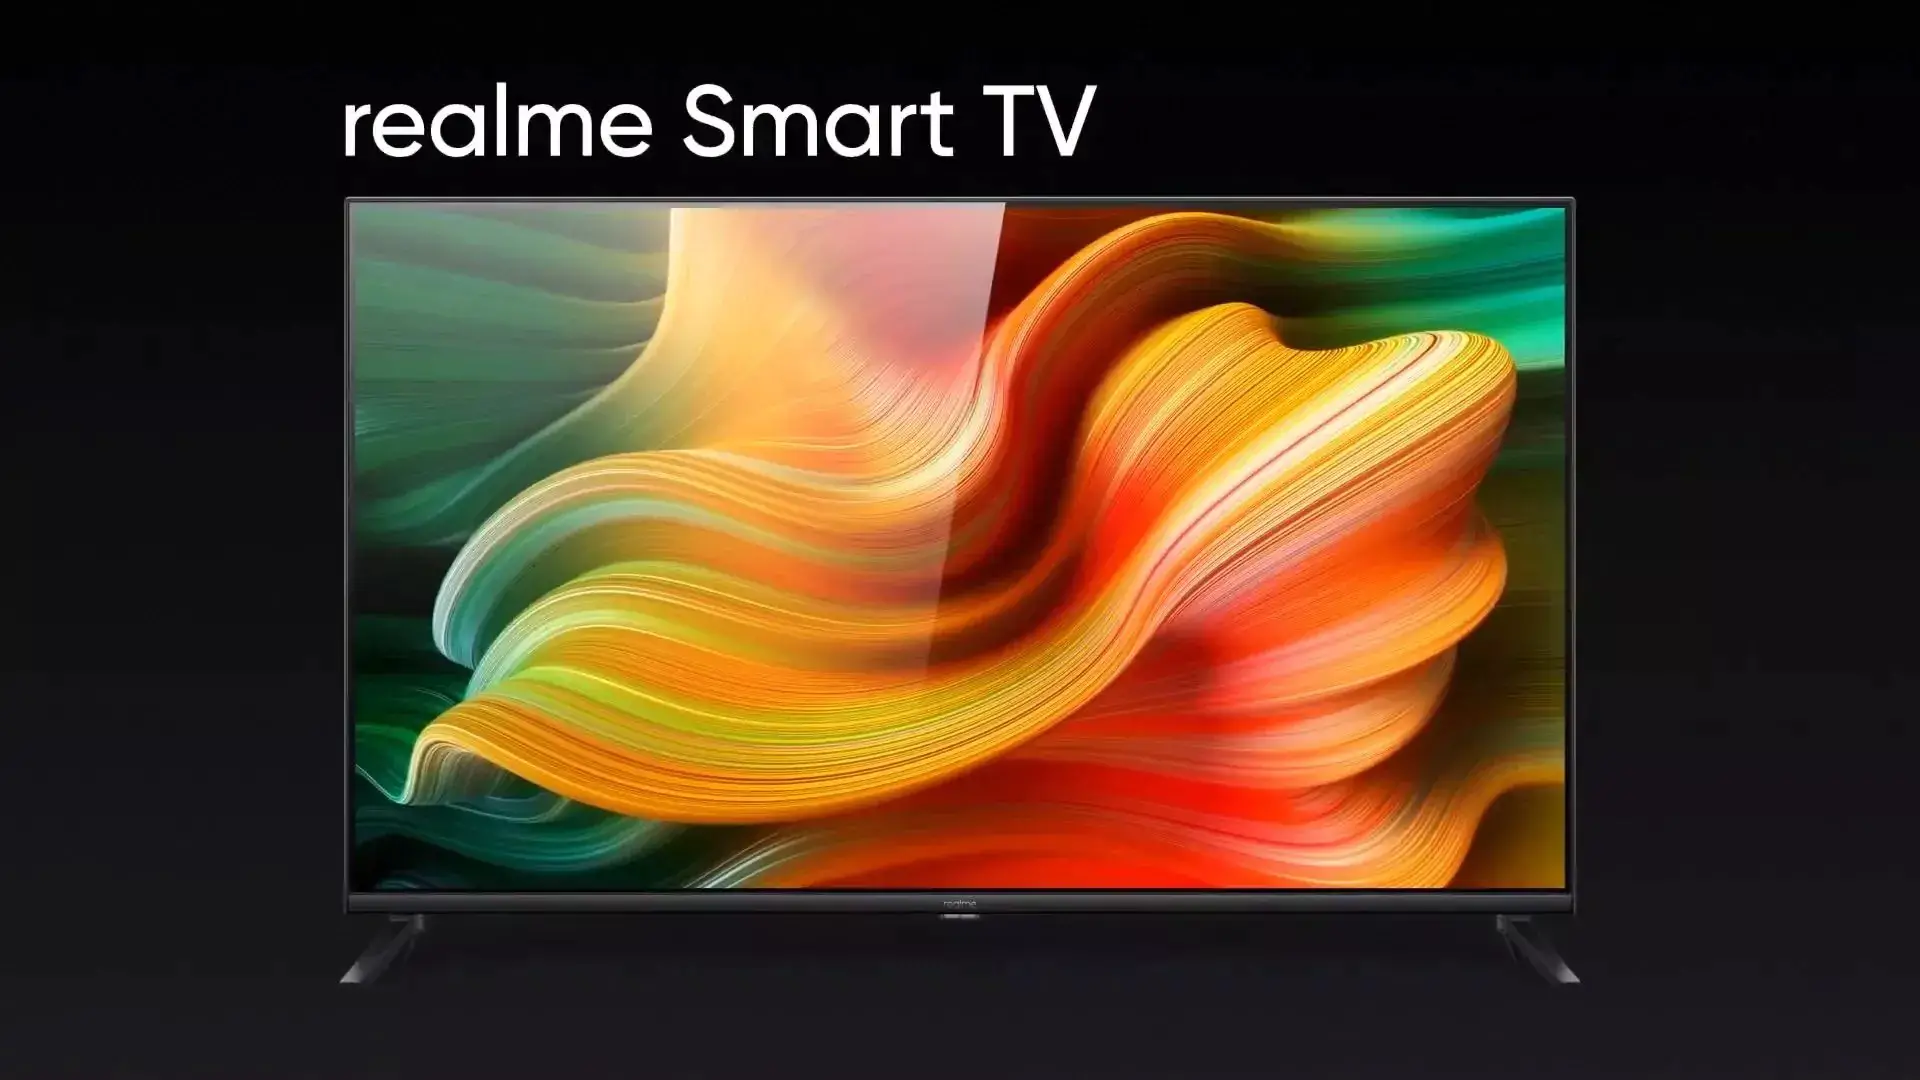 Smart TV realme